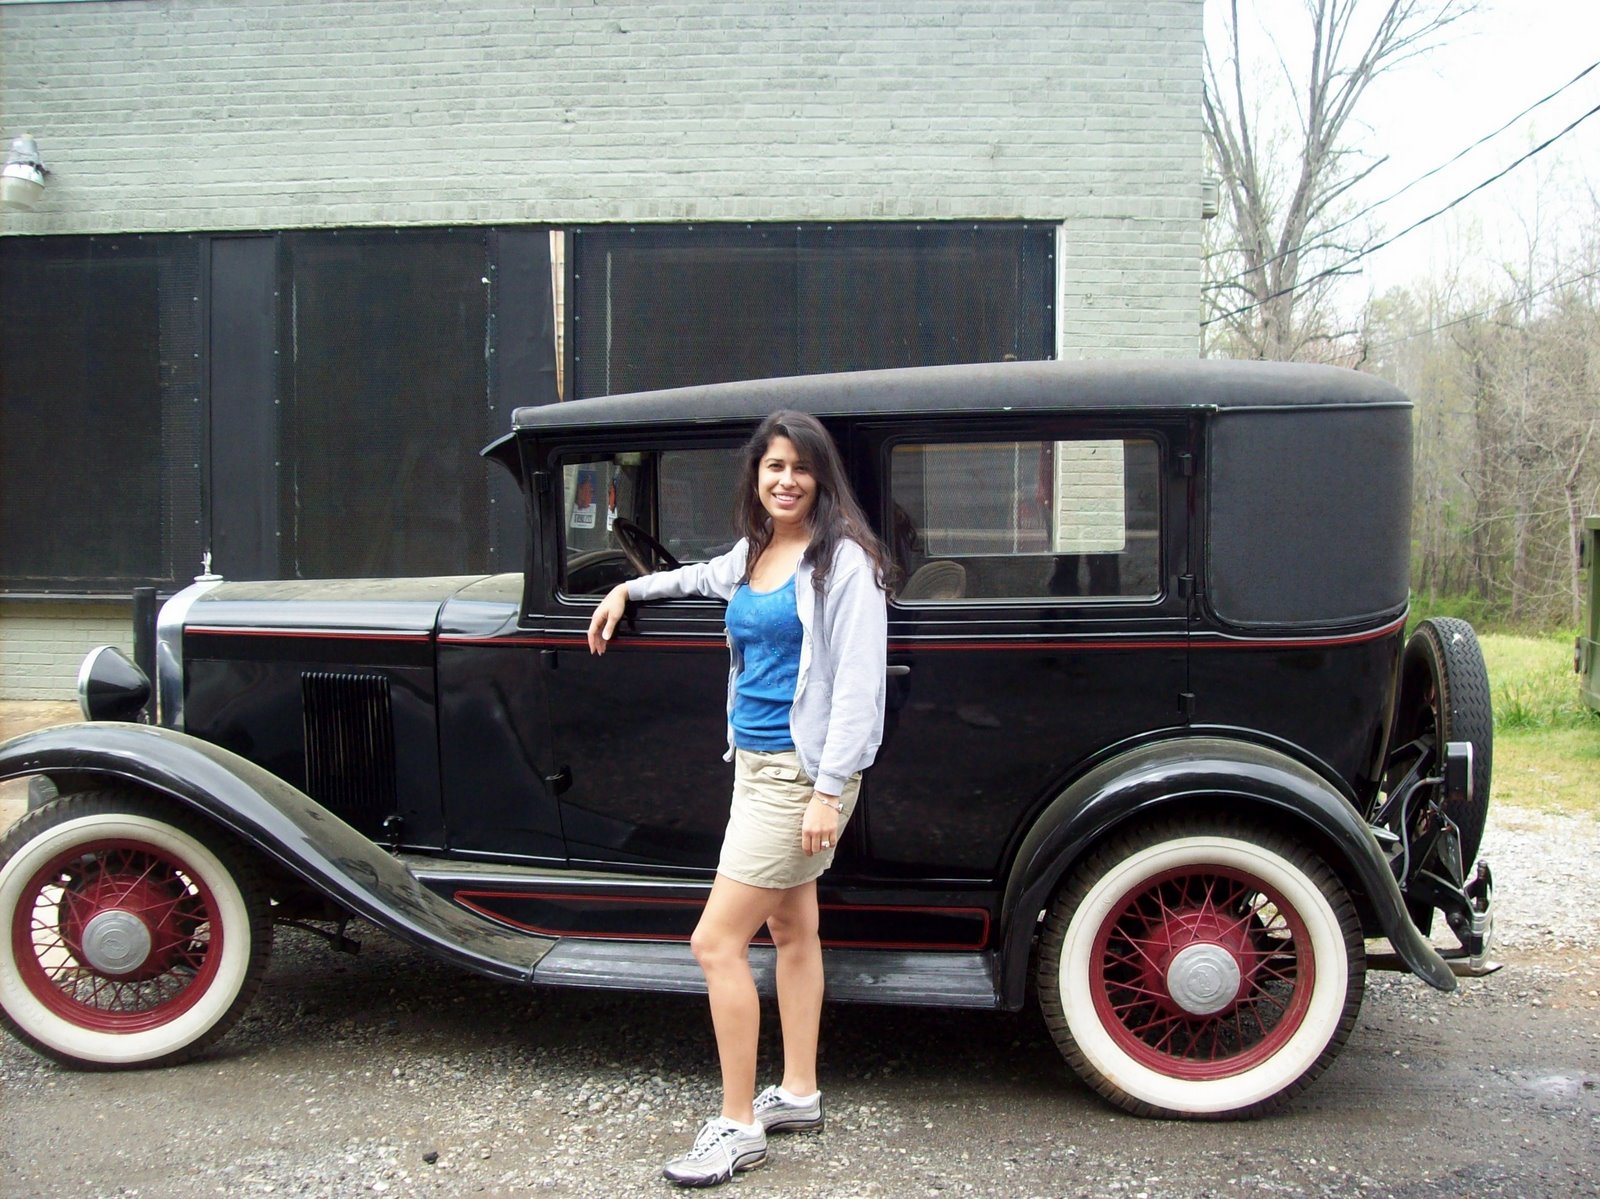 [Melanie+Knight+&+Antique+Car.JPG]